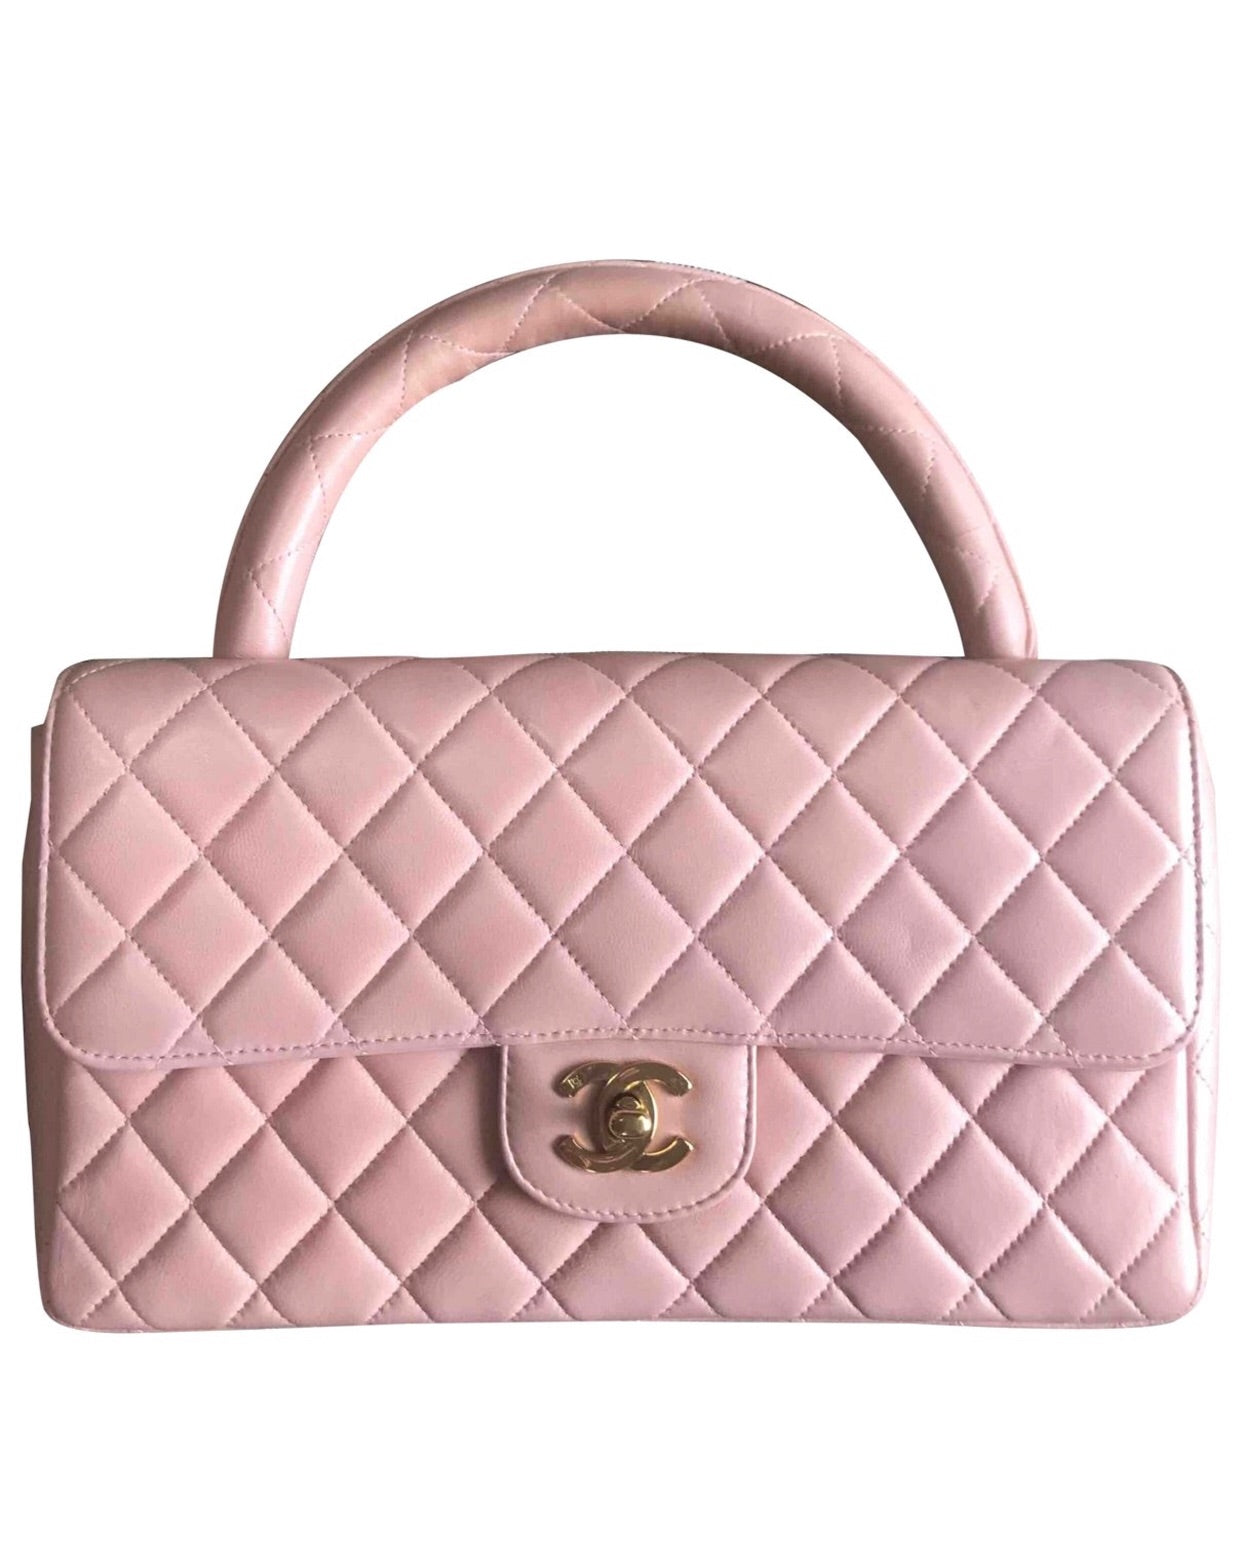 Vintage CHANEL milky pink color lambskin classic 2.55 handbag